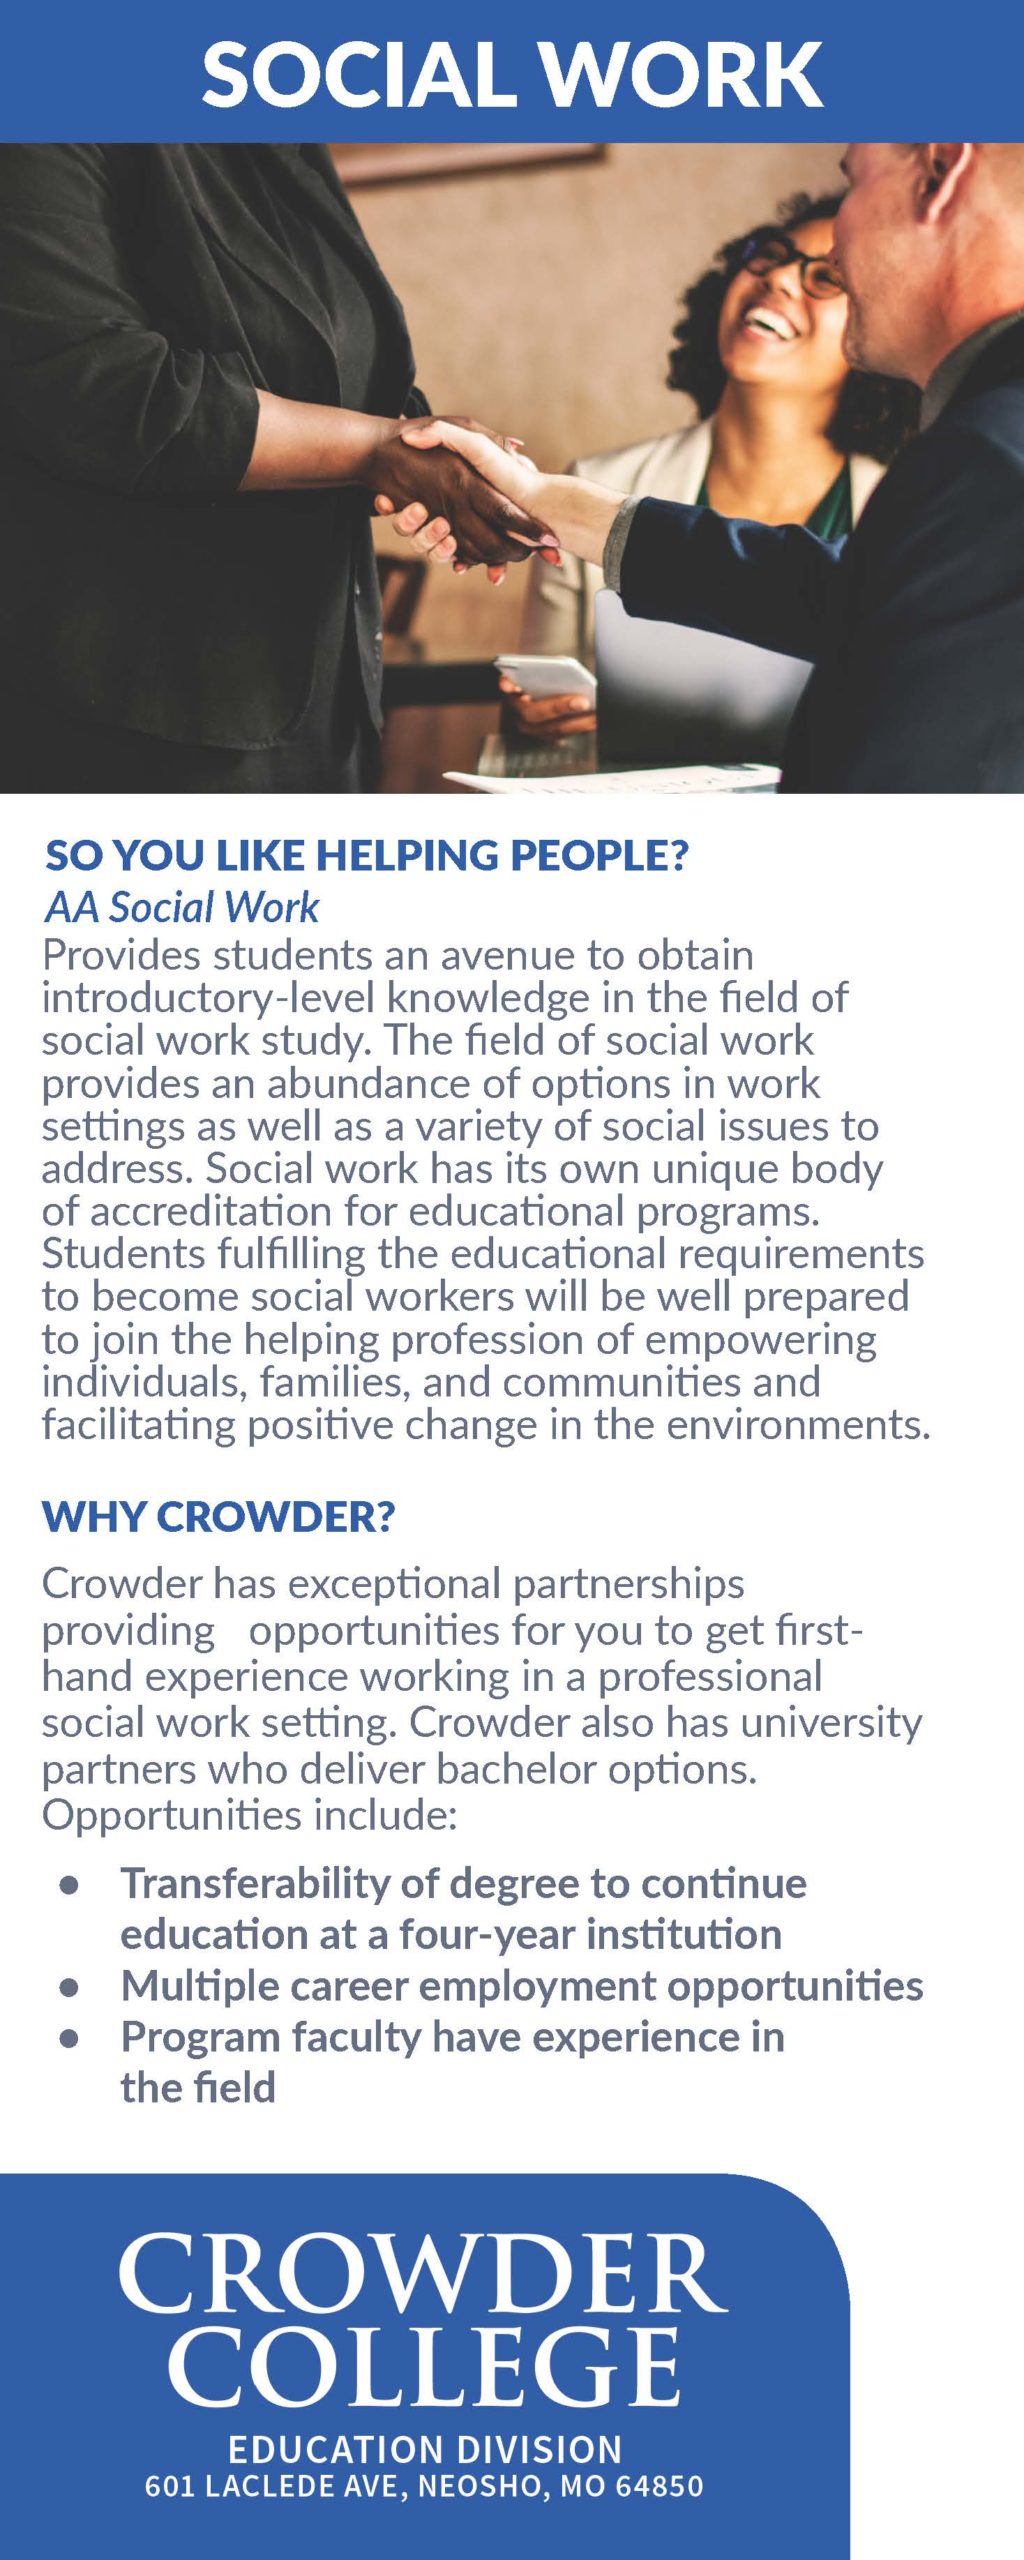 Social Work program information at Crowder College